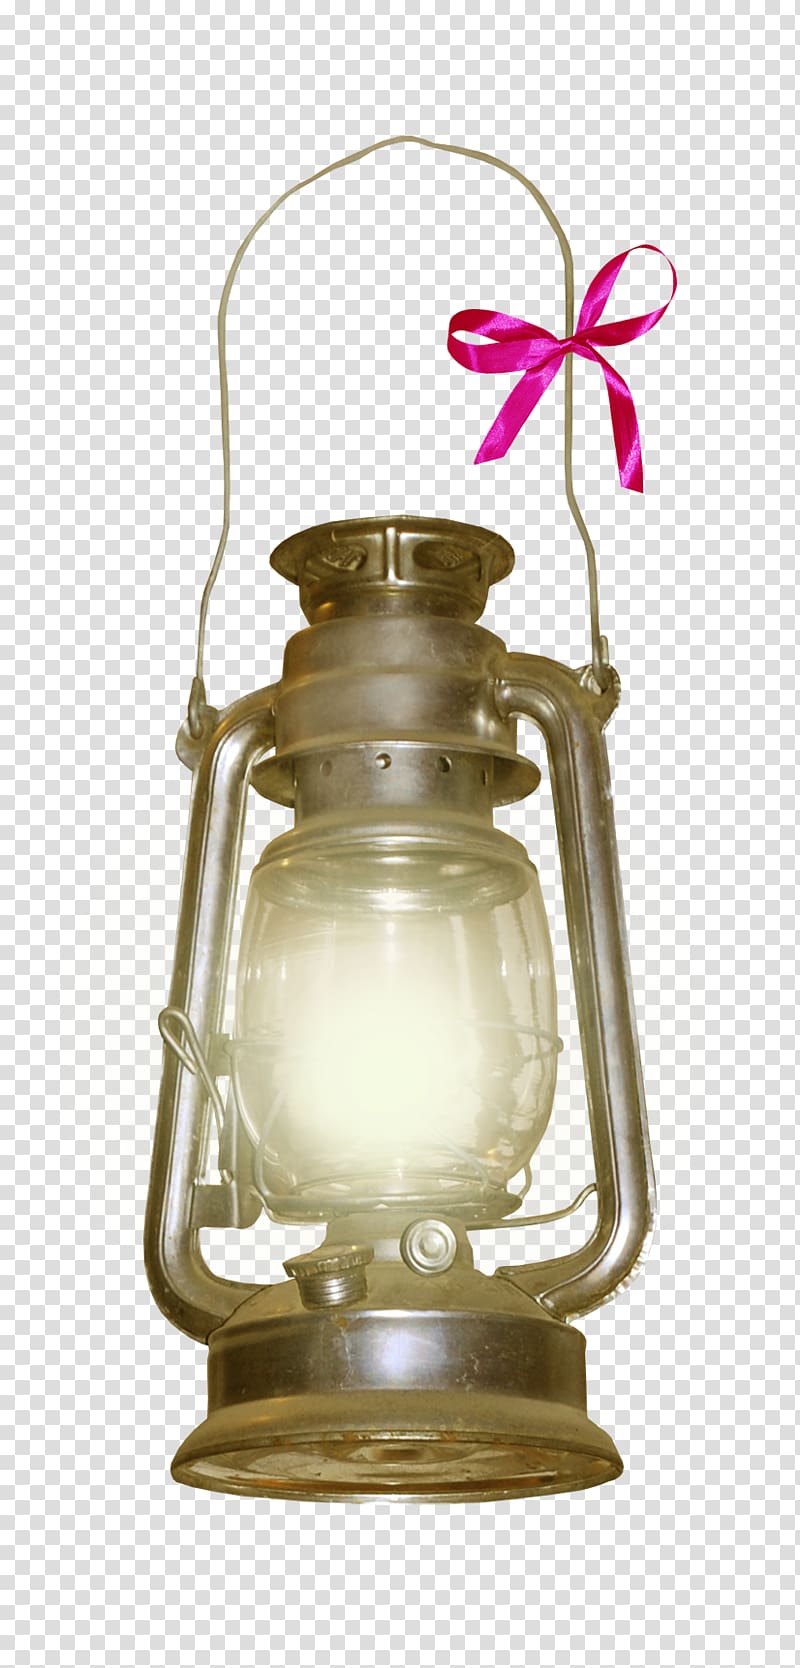 Lighting Light fixture Lantern Lamp, Pink bow cloth decorative lamps transparent background PNG clipart